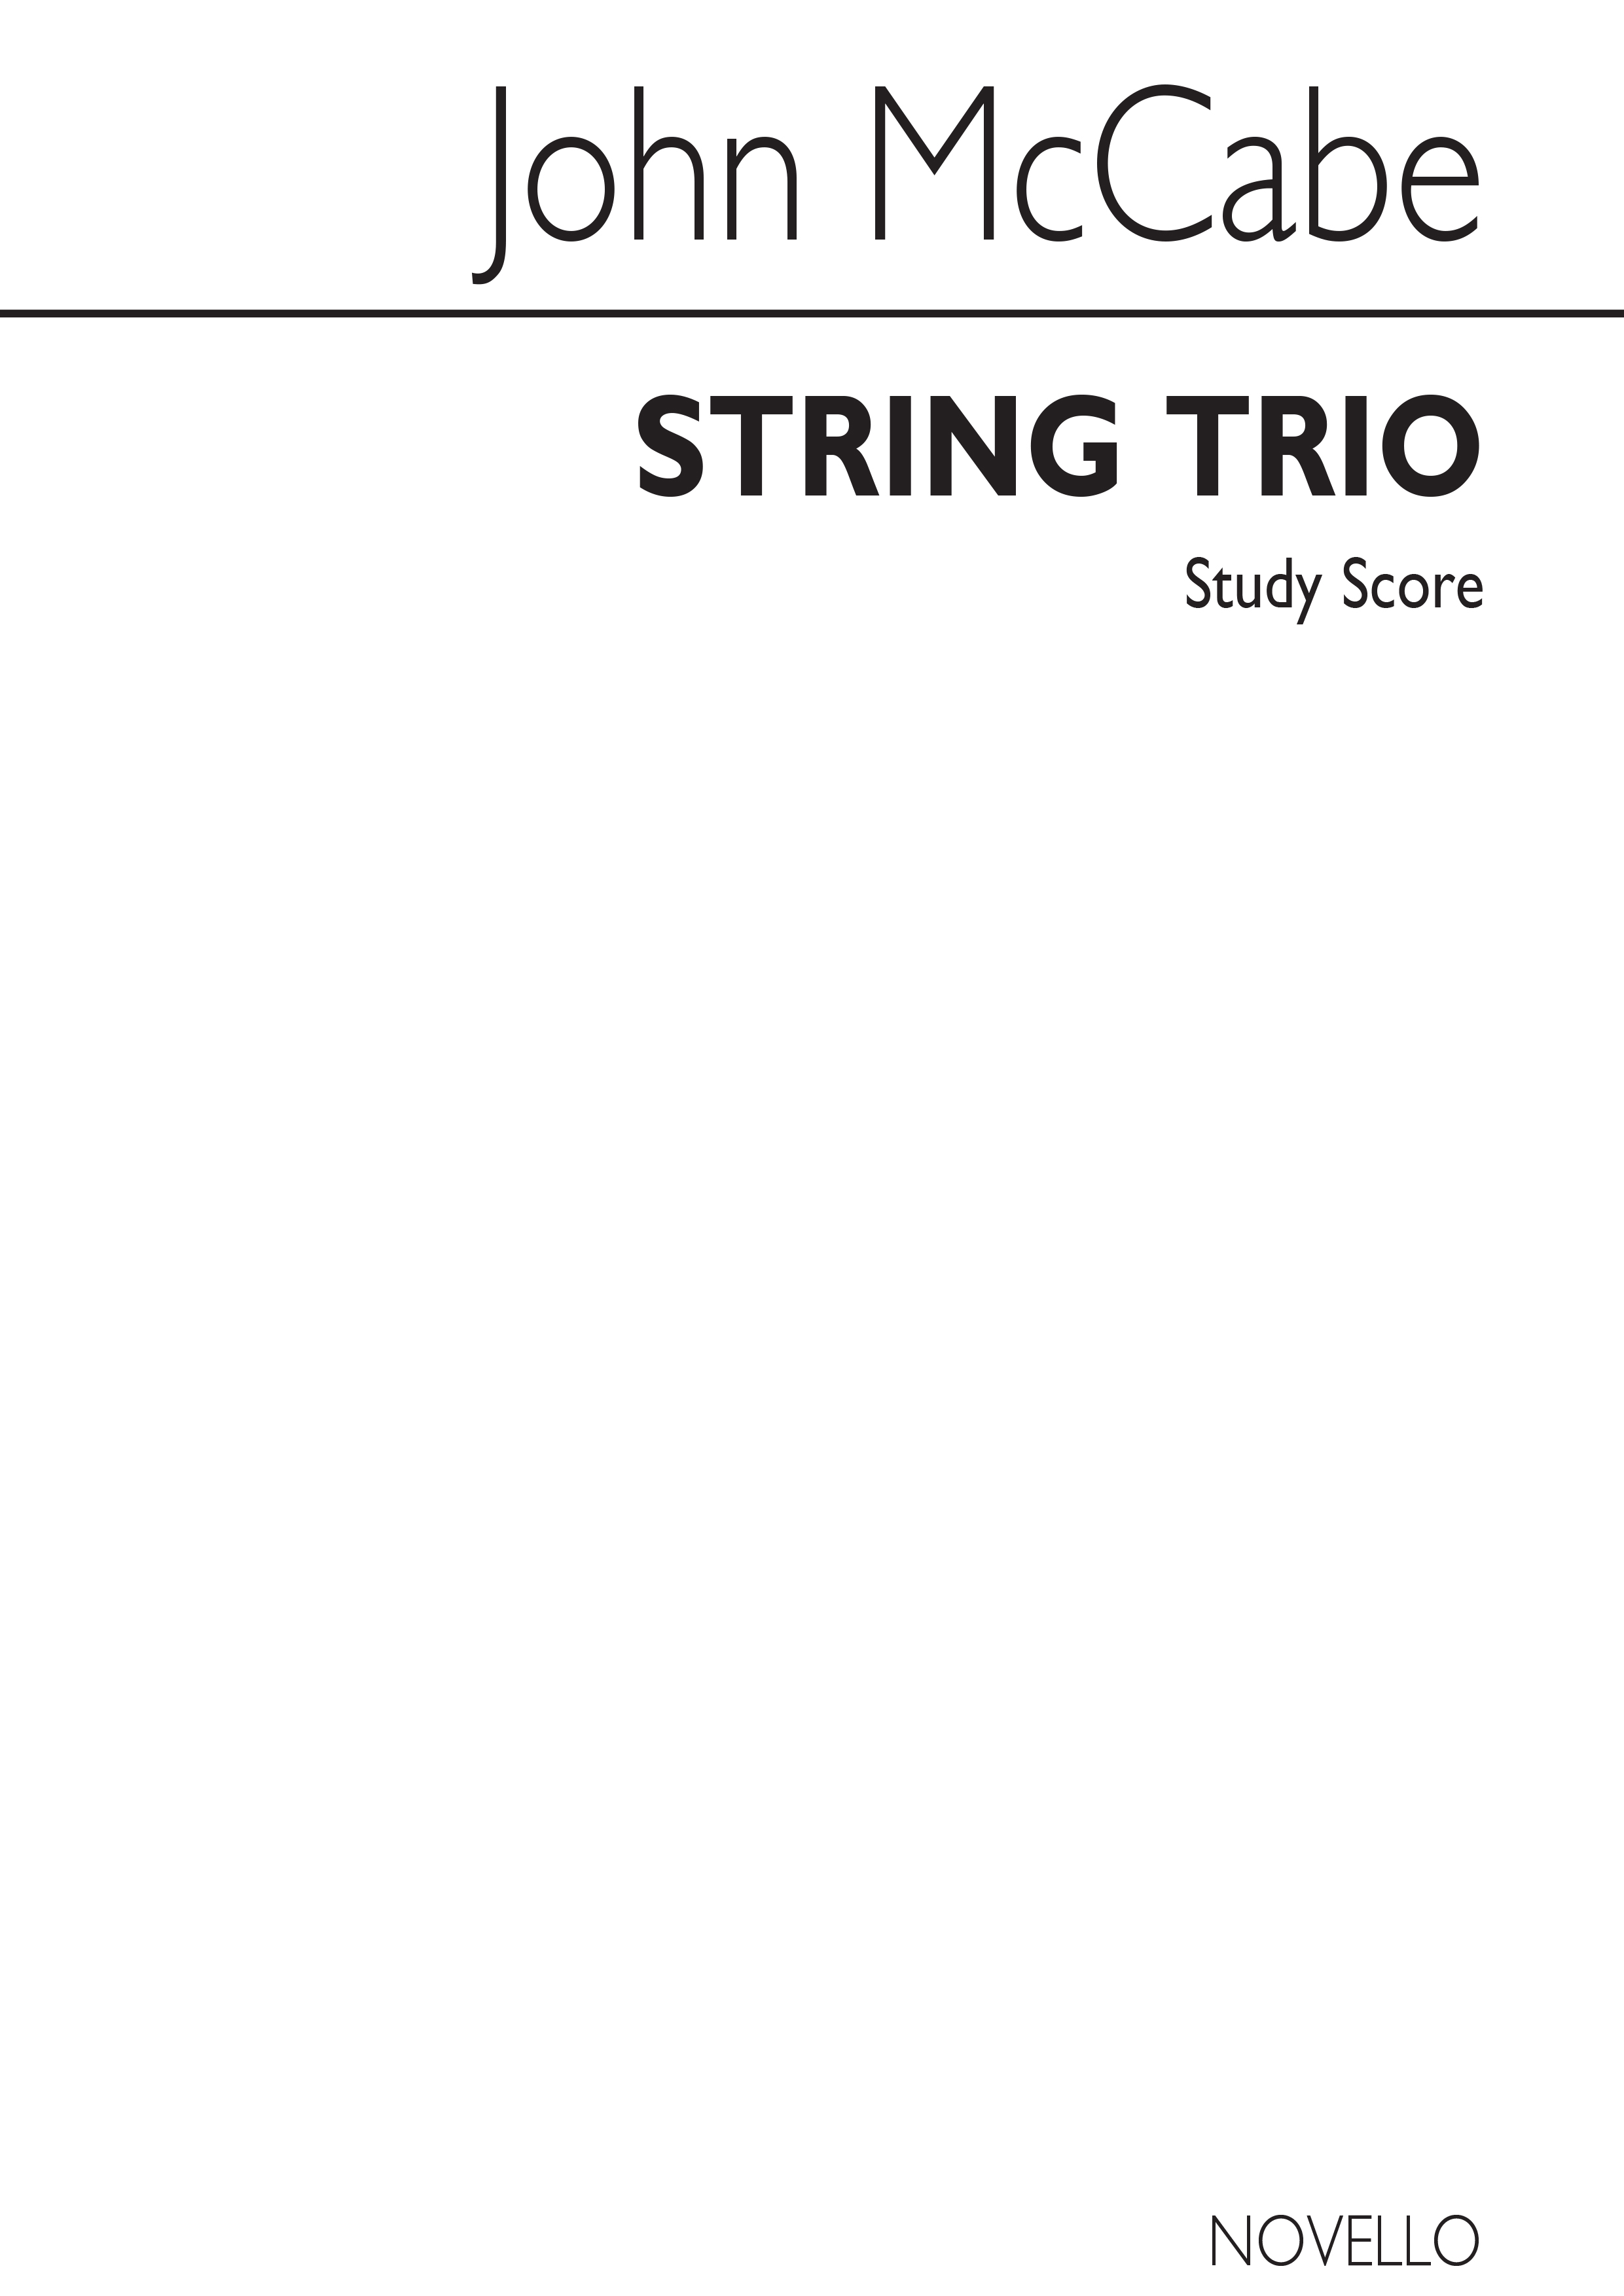 McCabe: String Trio Op.37 (Study Score)